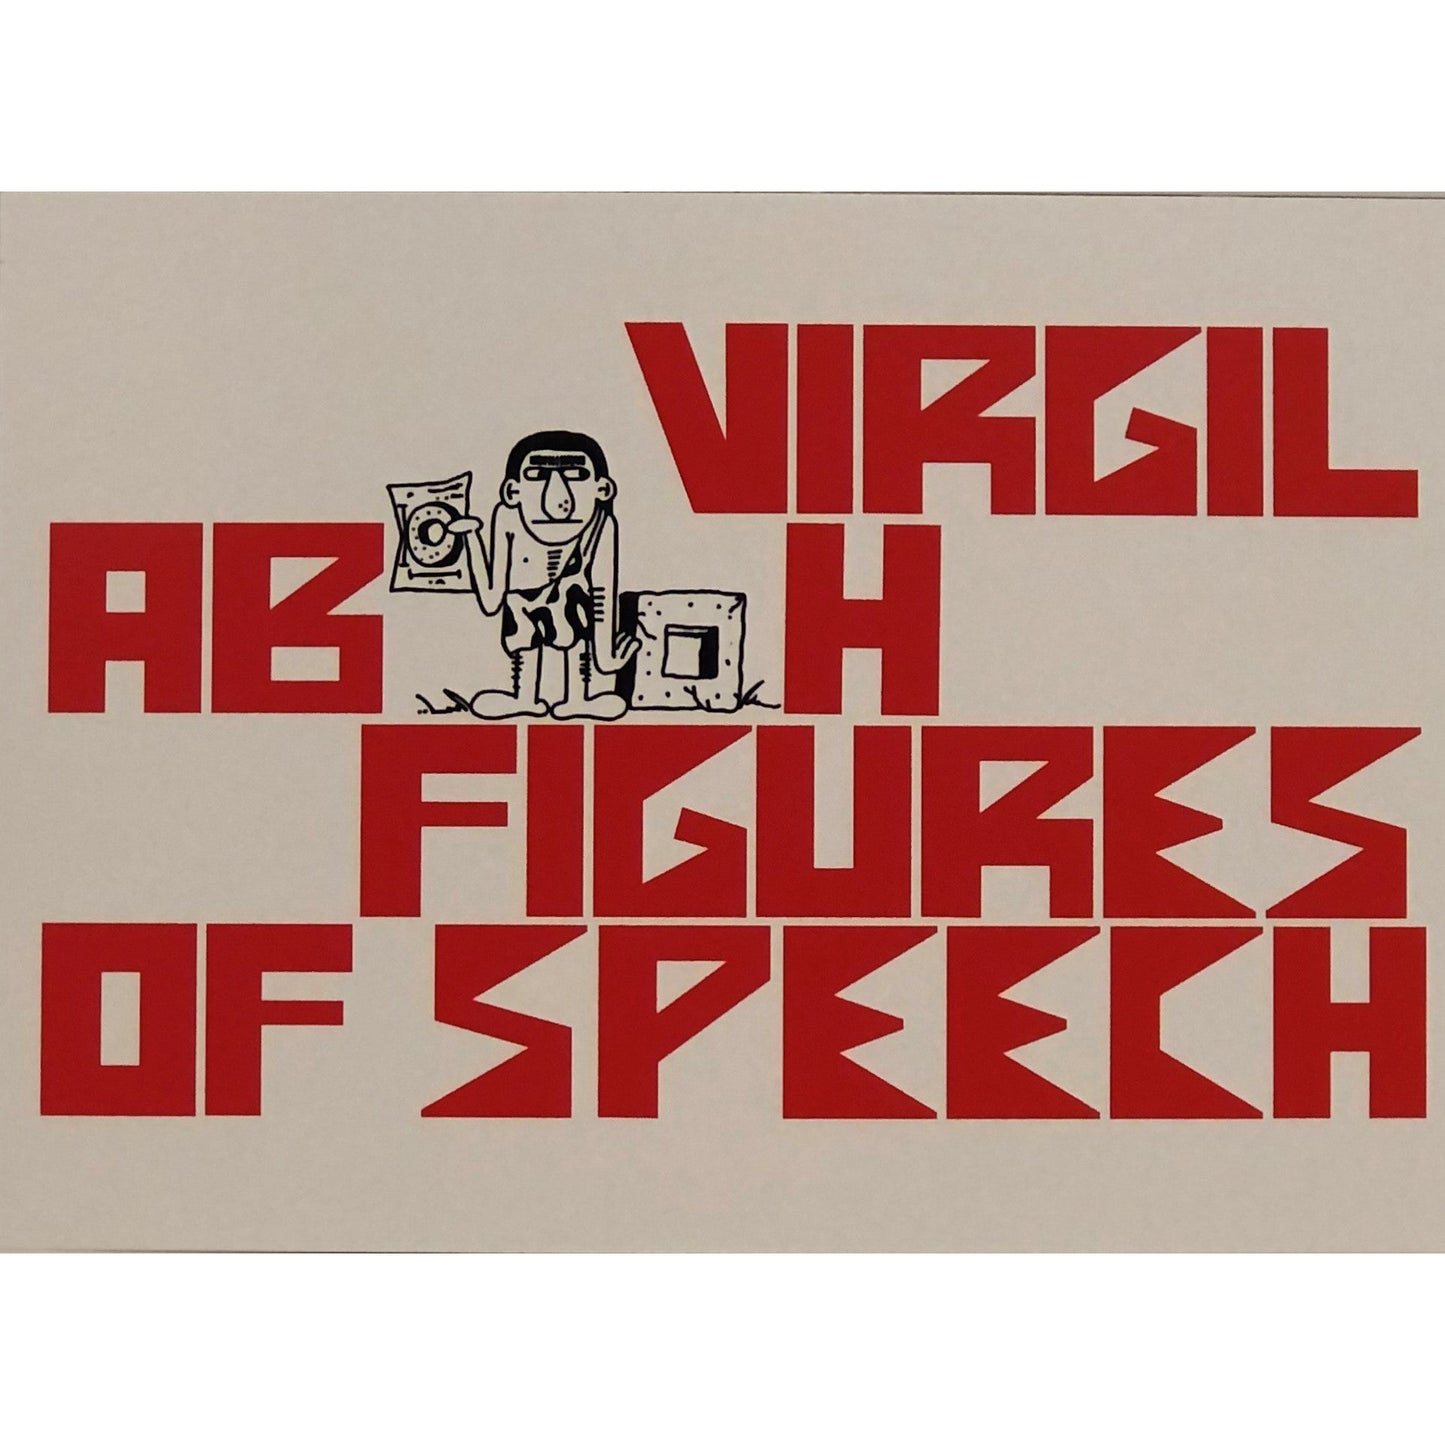 Virgil Abloh Figures of Speech Museum Exhibition Book